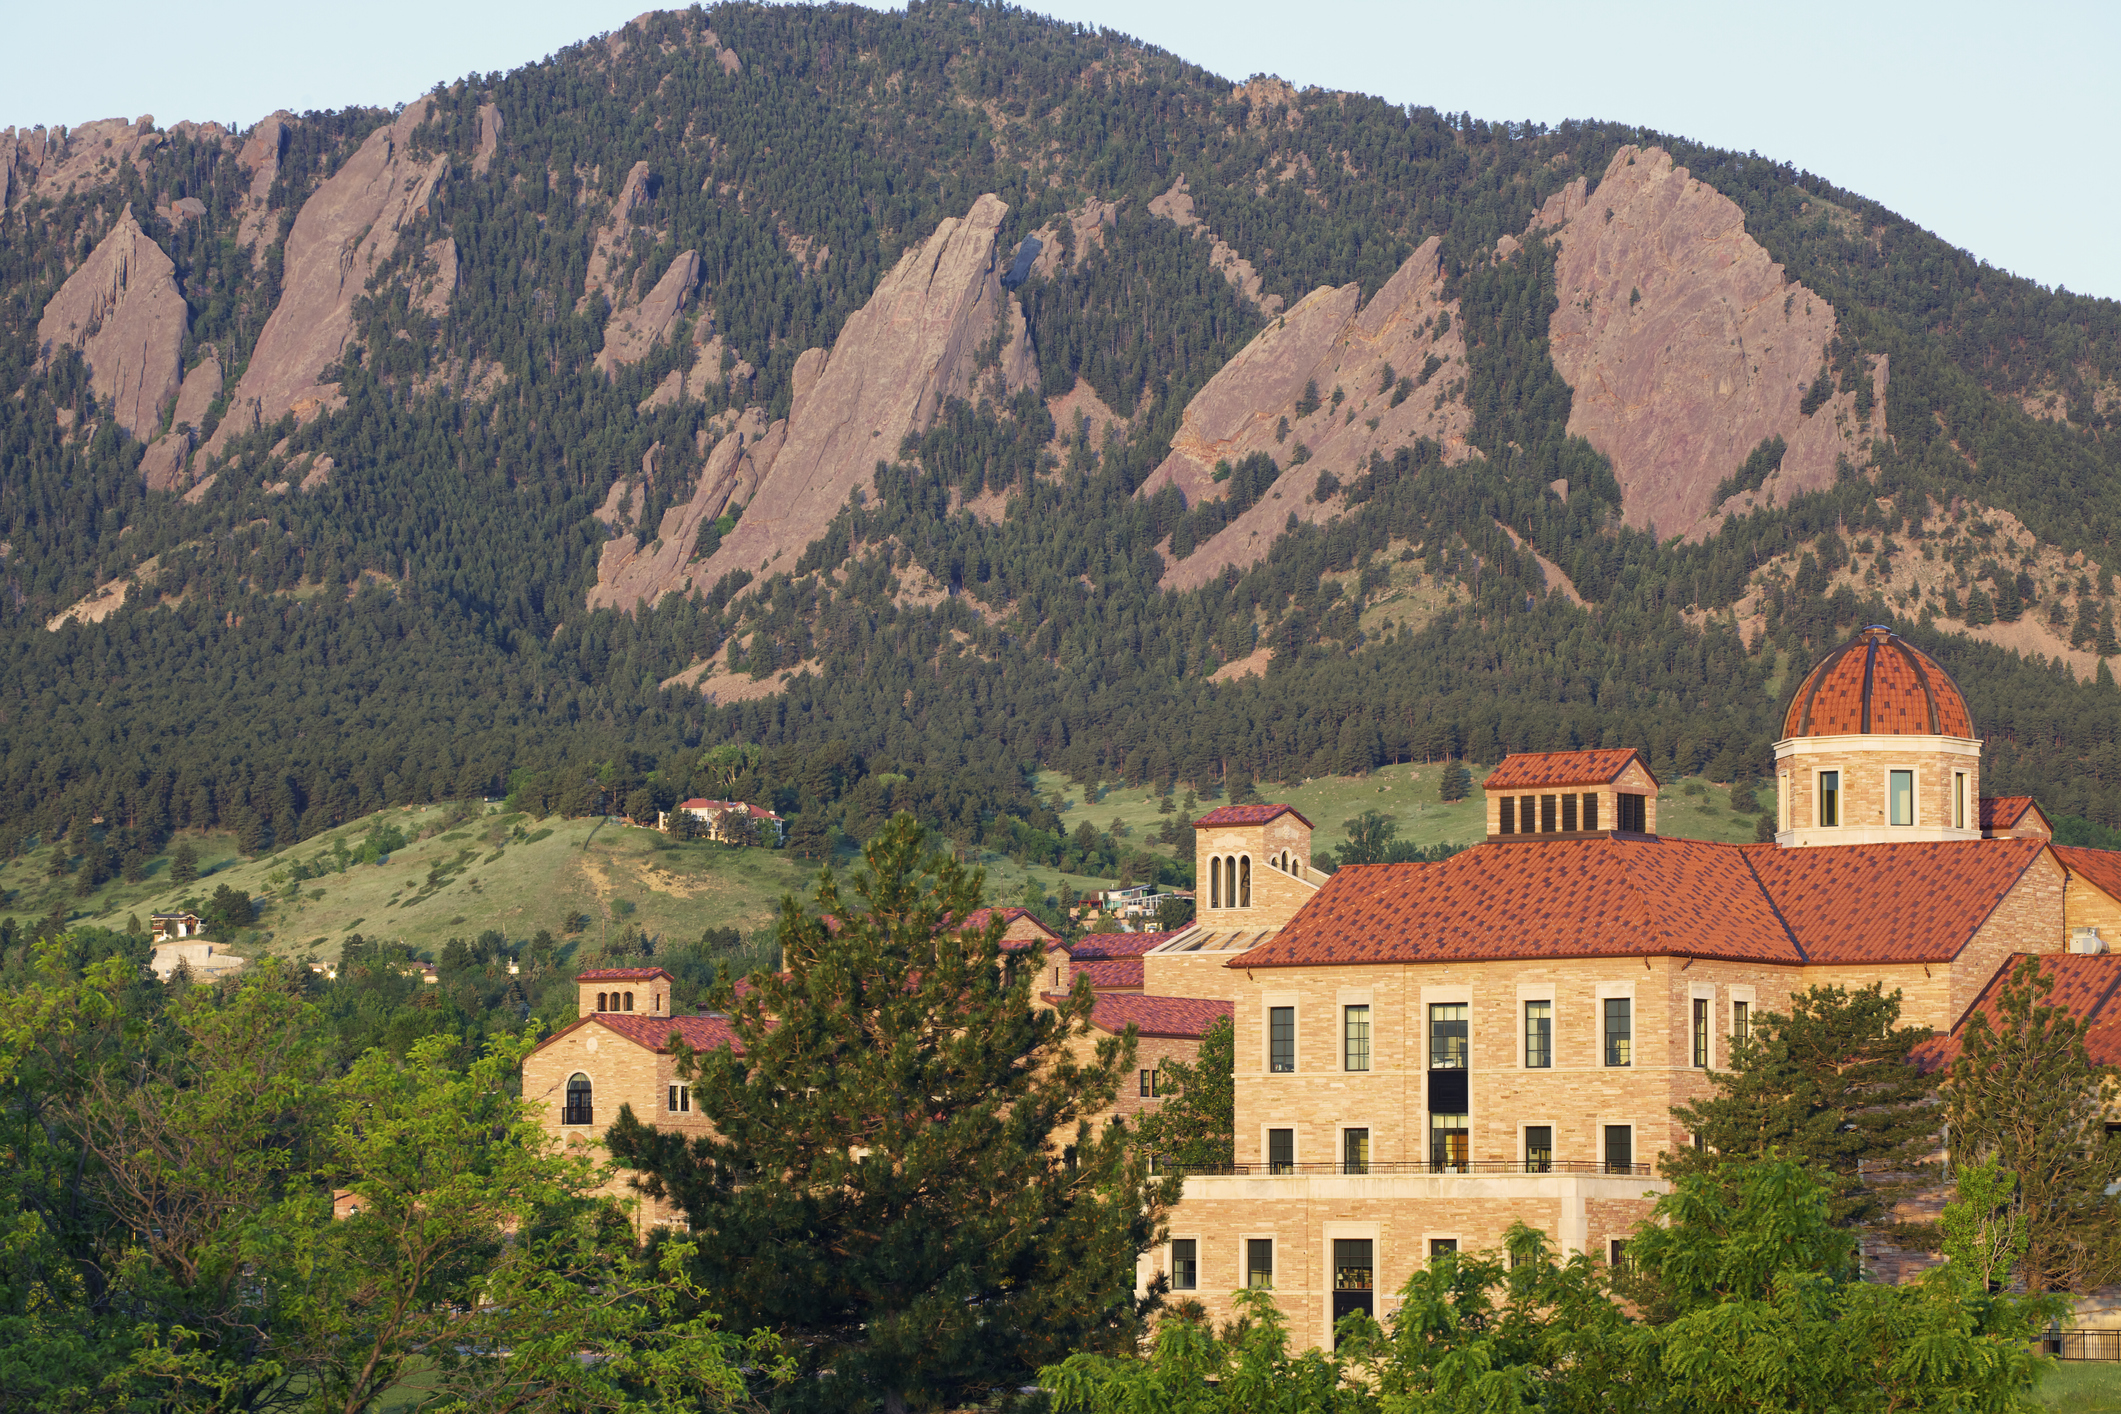 The University of Colorado Boulder